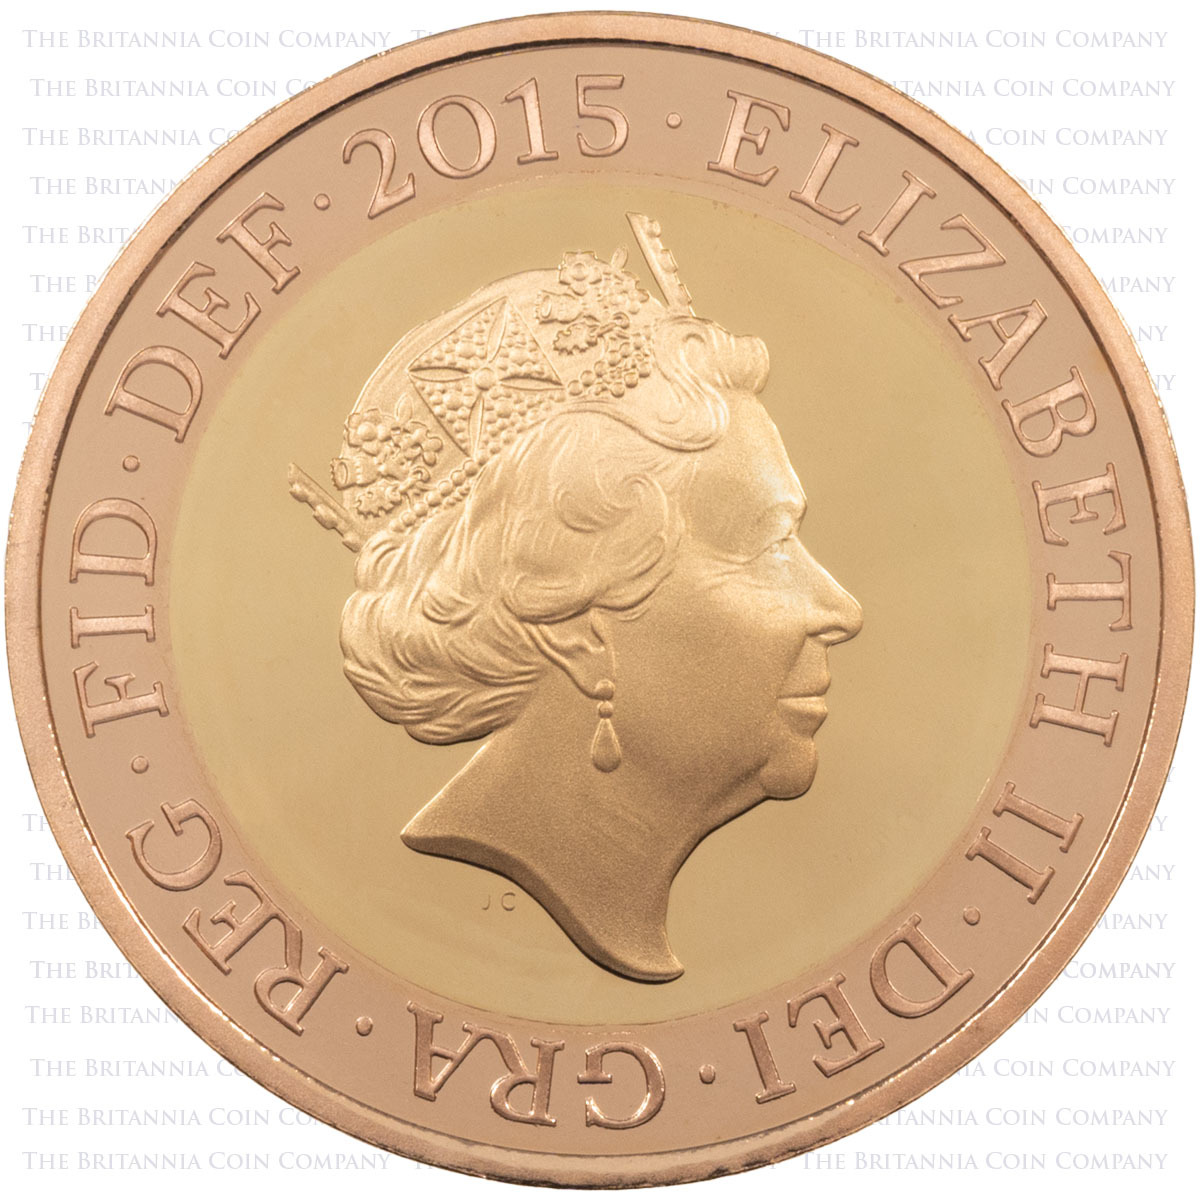 BR15D2GP 2015 Definitive Britannia Two Pound Gold Proof Coin Obverse